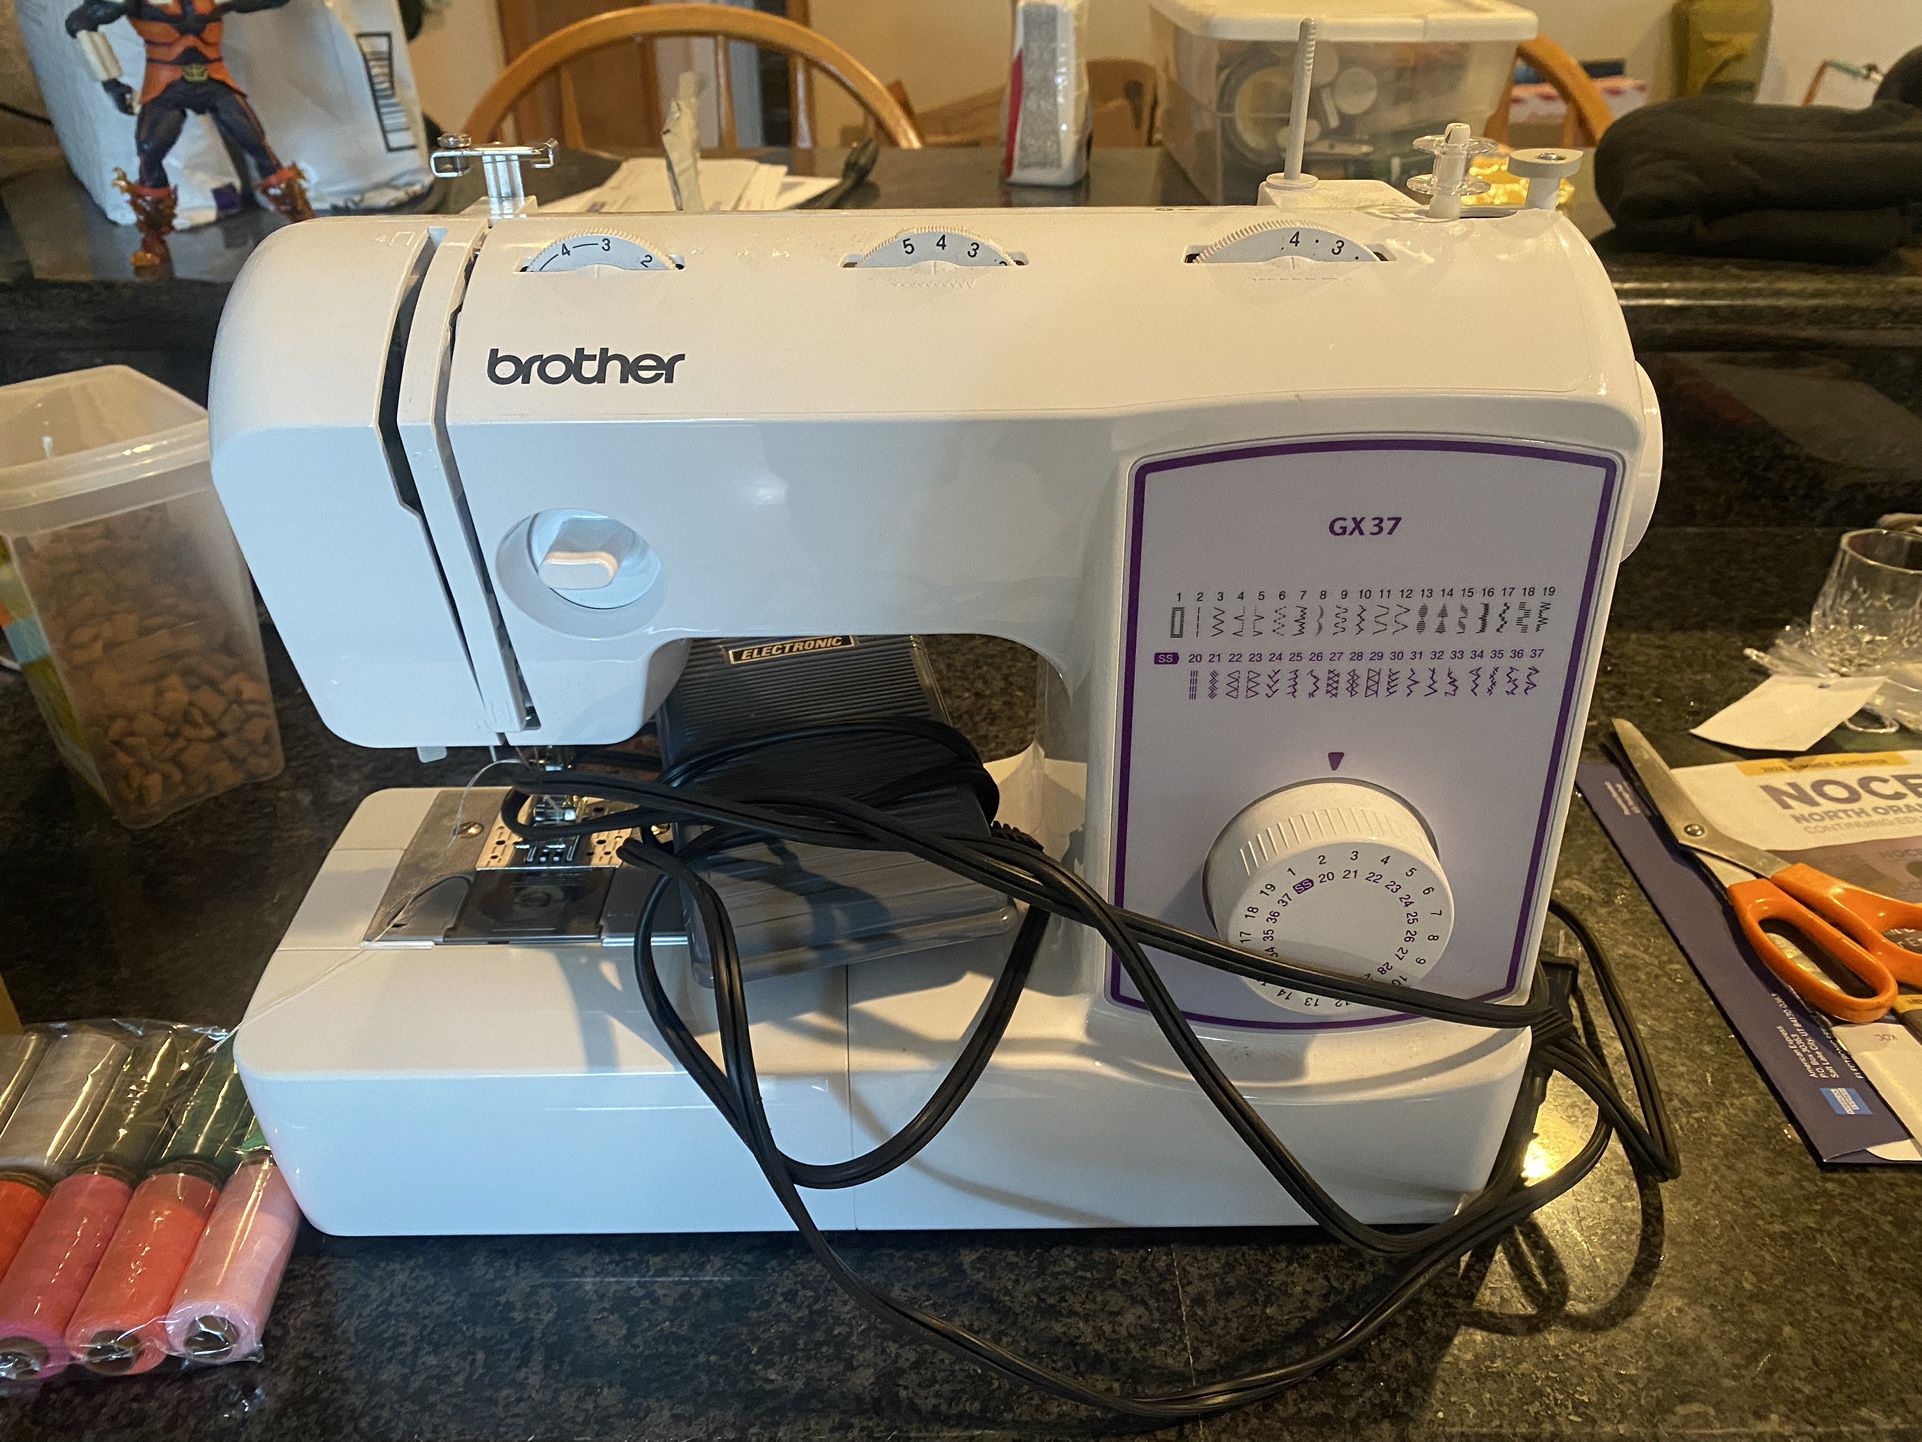 Brother GX37 Sewing Machine